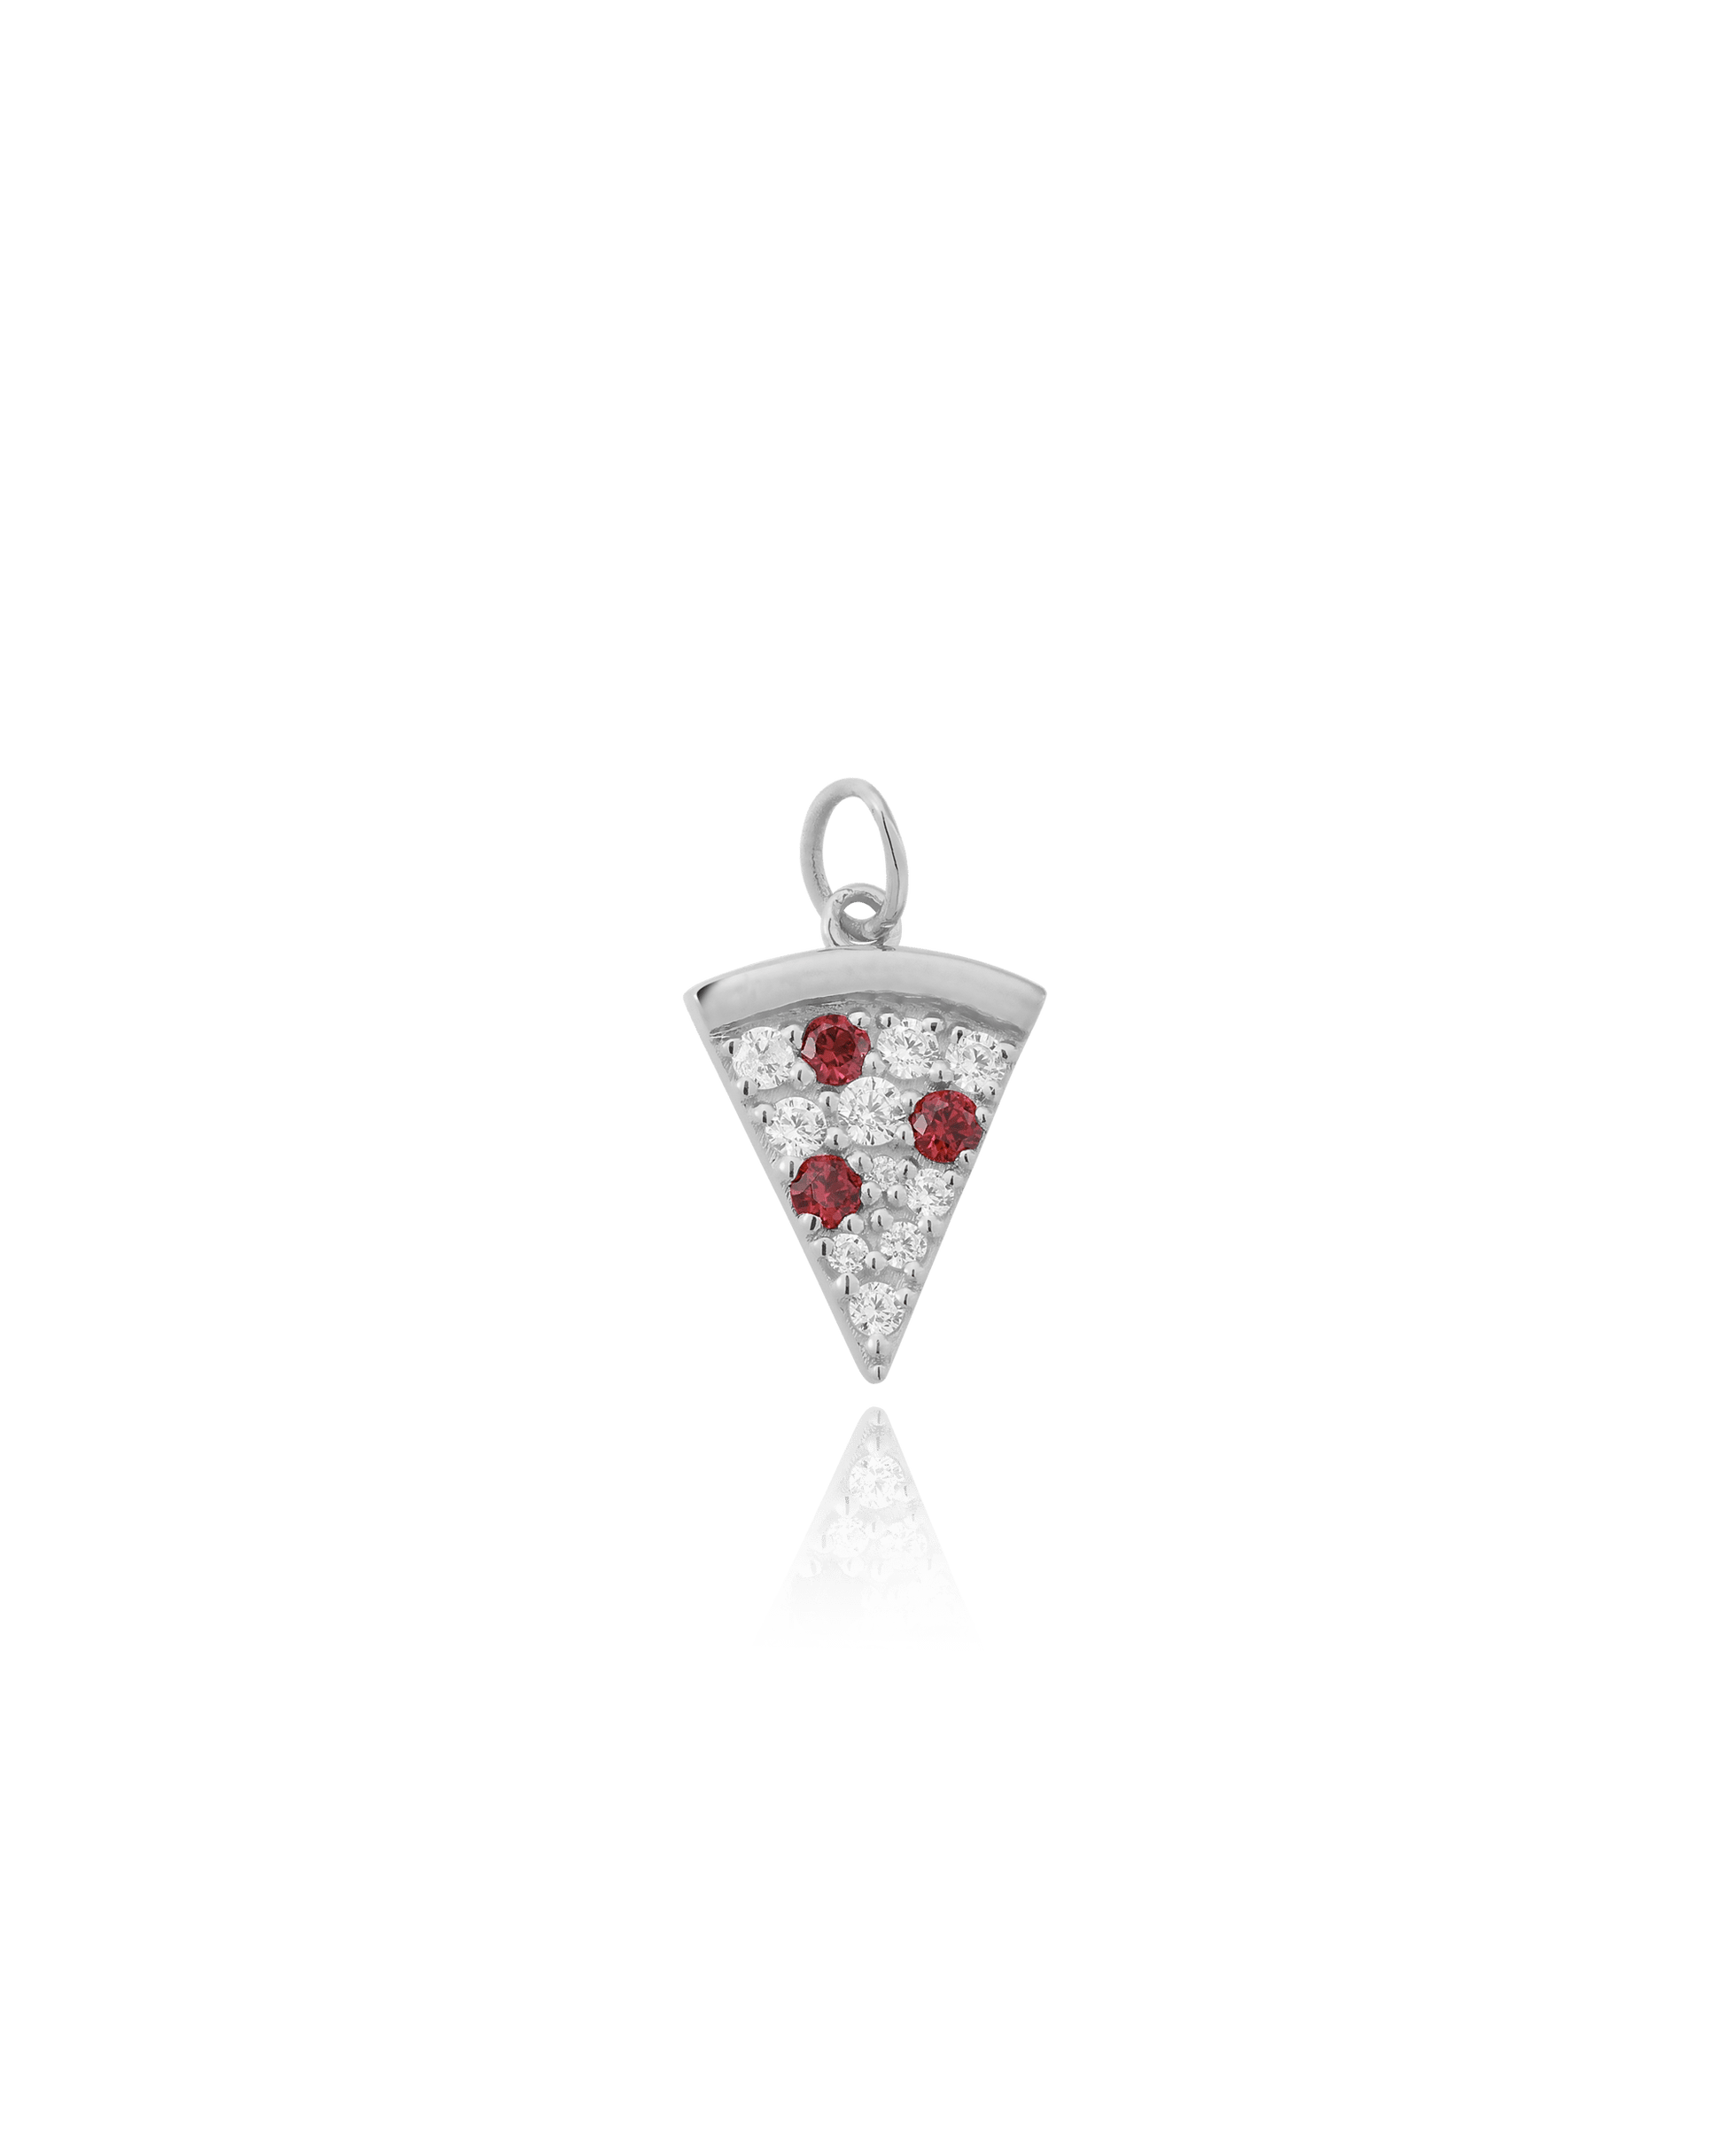 Pizza Charm - 925 Sterling Silver Charm magal-dev No 